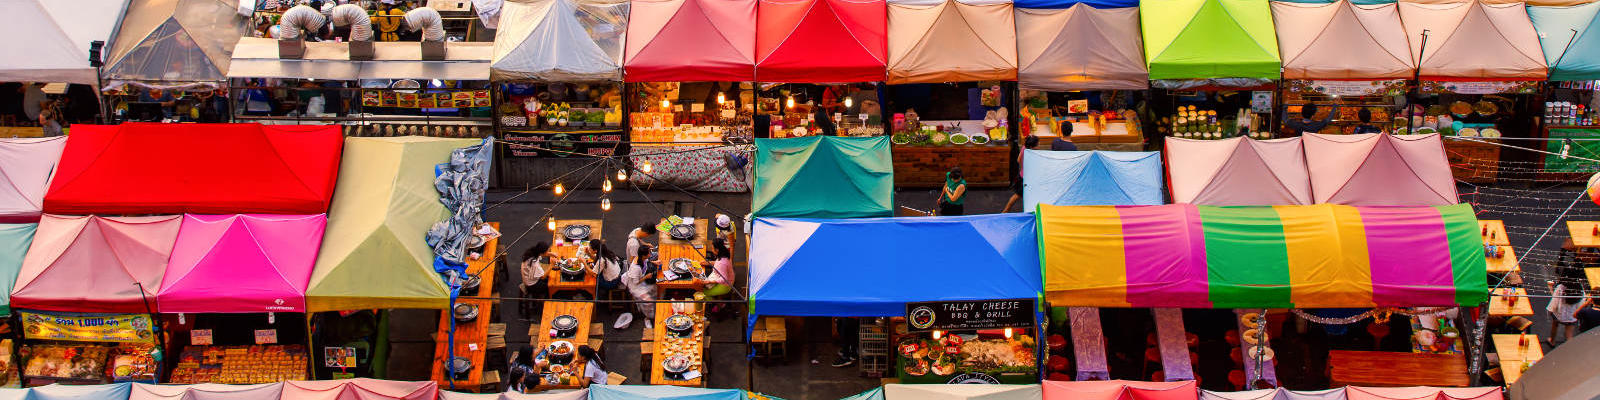 market in singapore